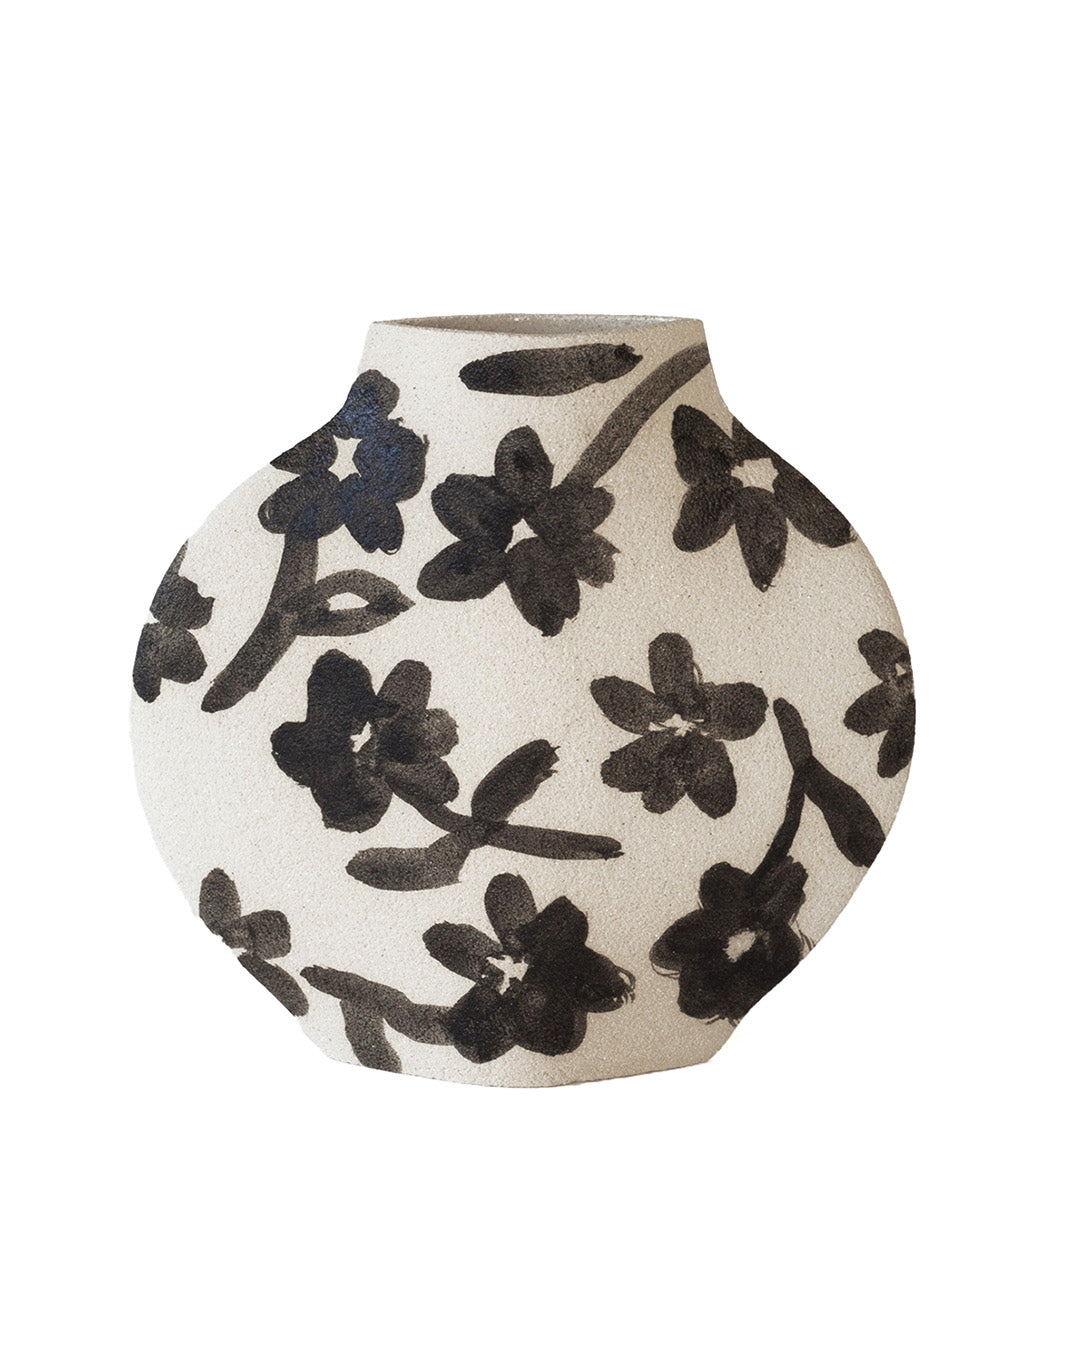 'Flowers Pattern' Ceramic Illustrated Vase